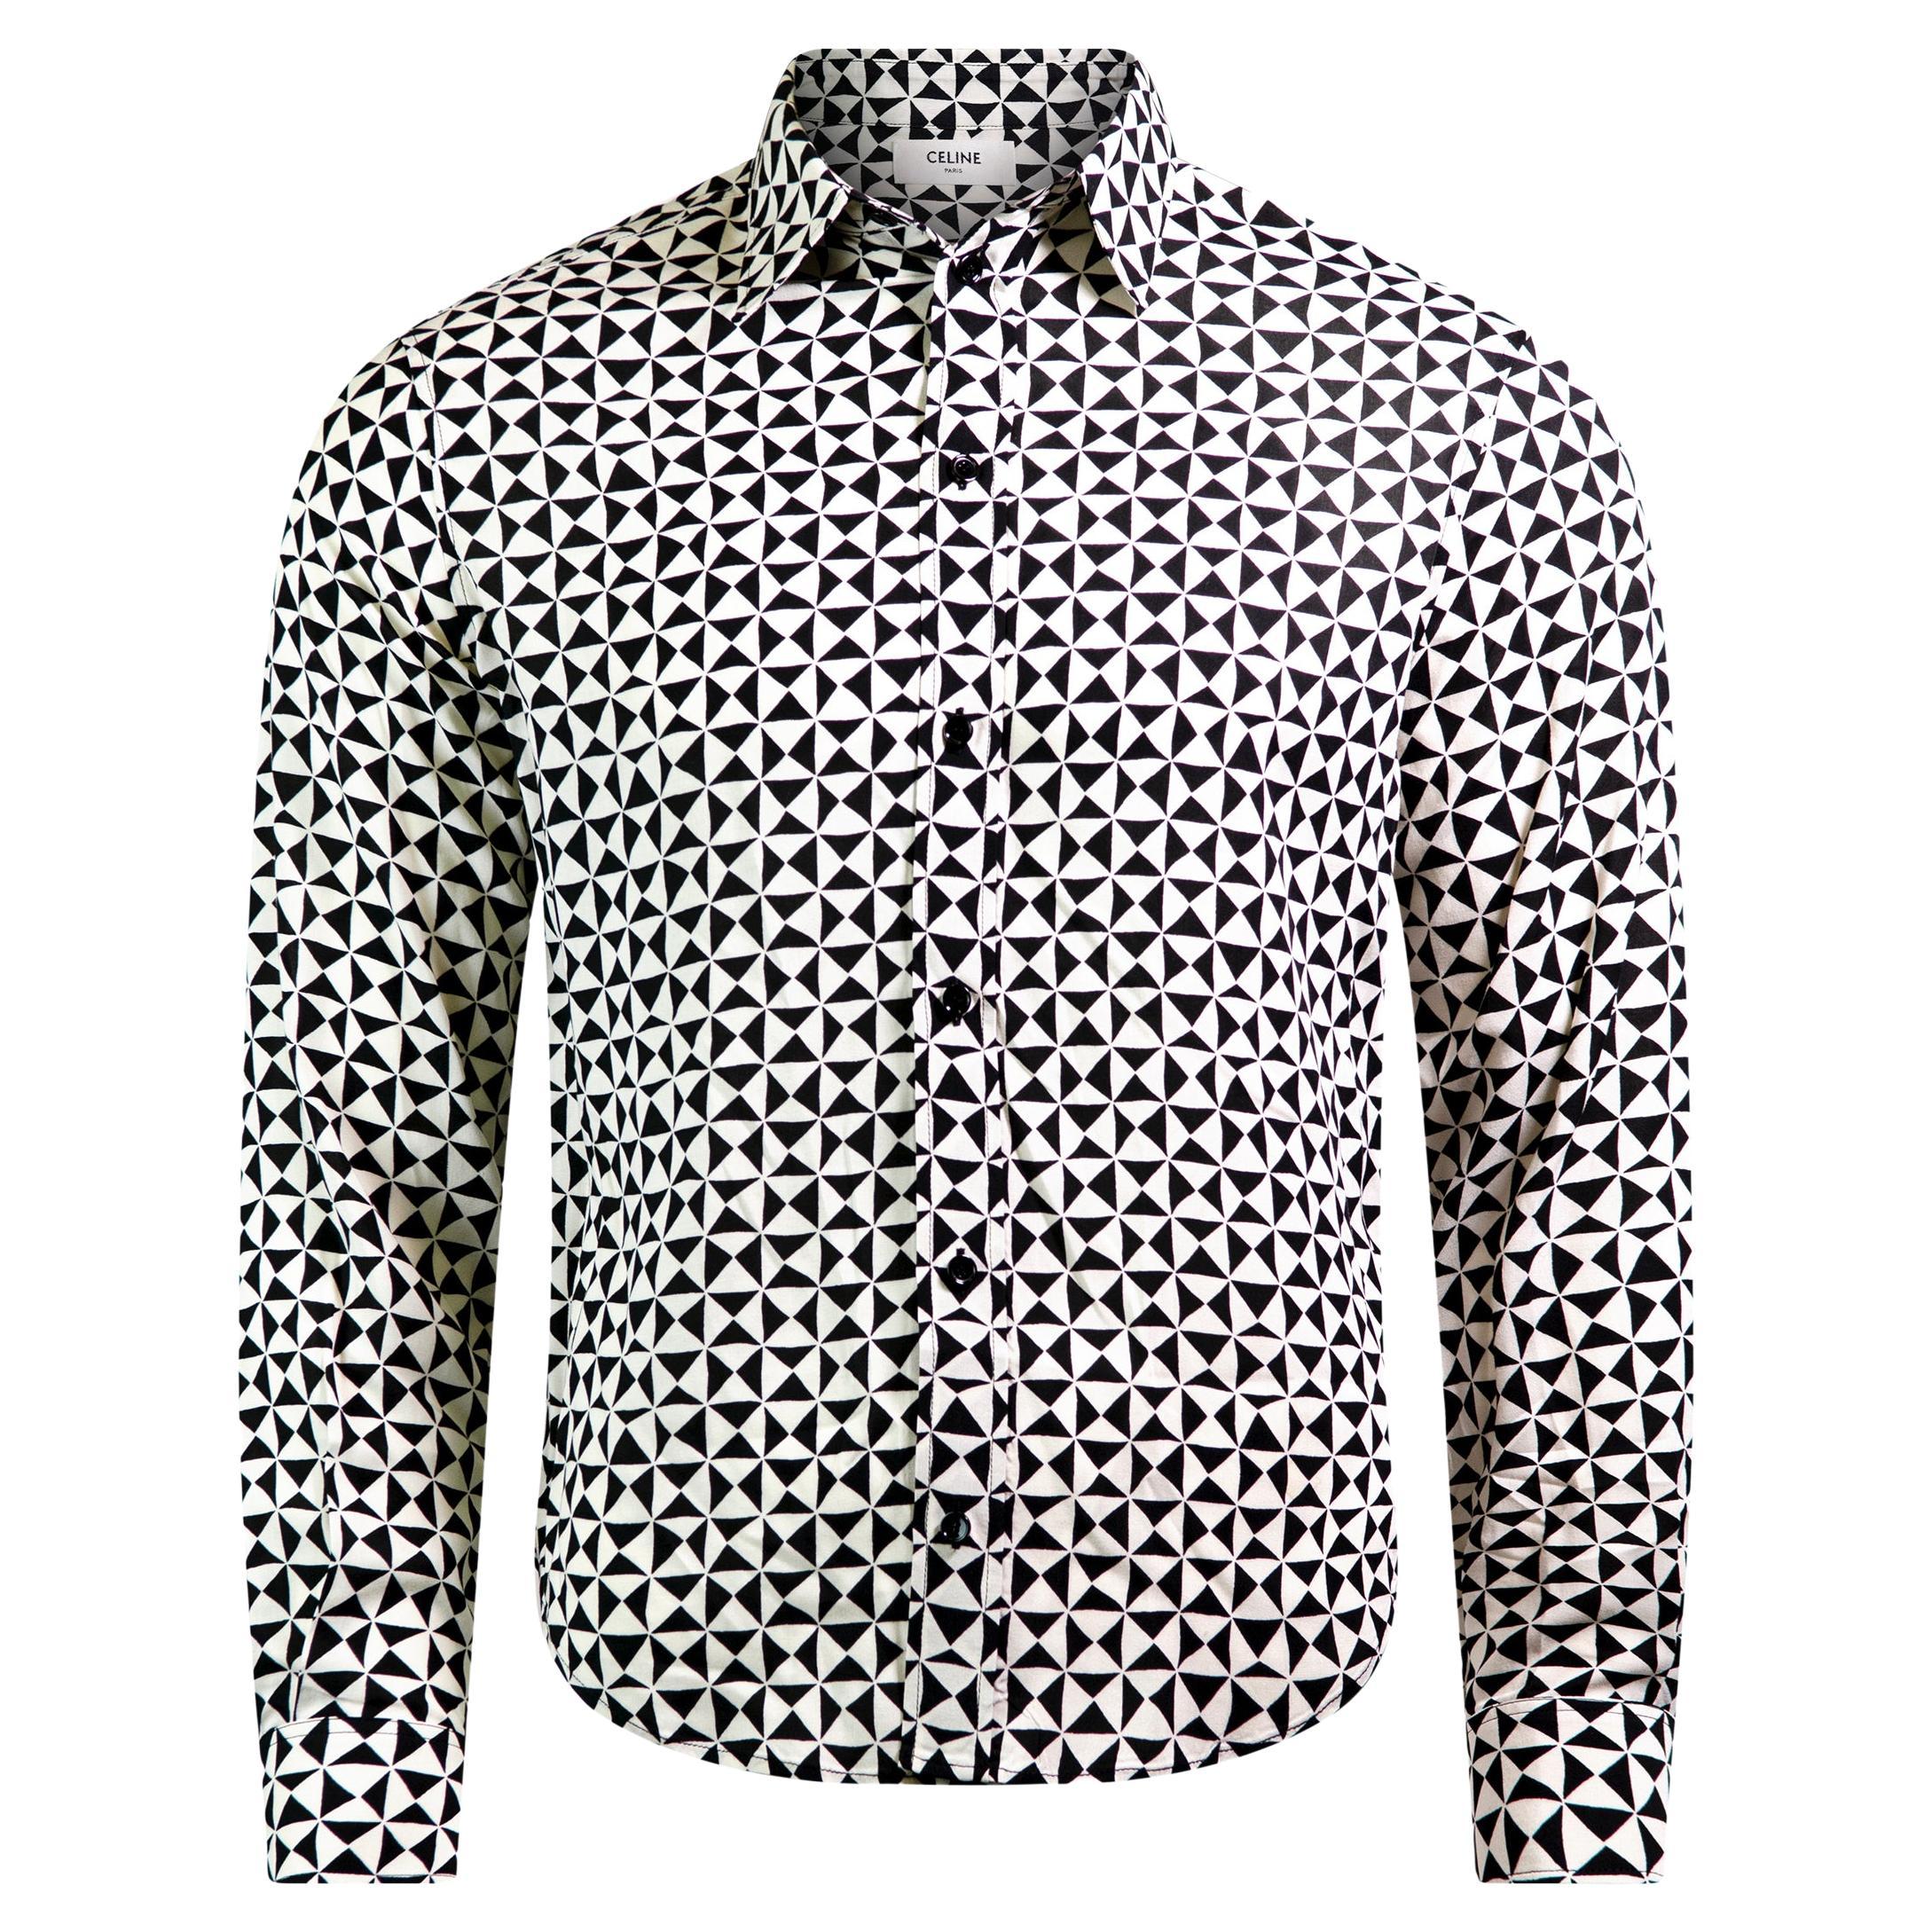 CELINE BY HEDI SLIMANE 70''s inspiriertes monochromes Hemd